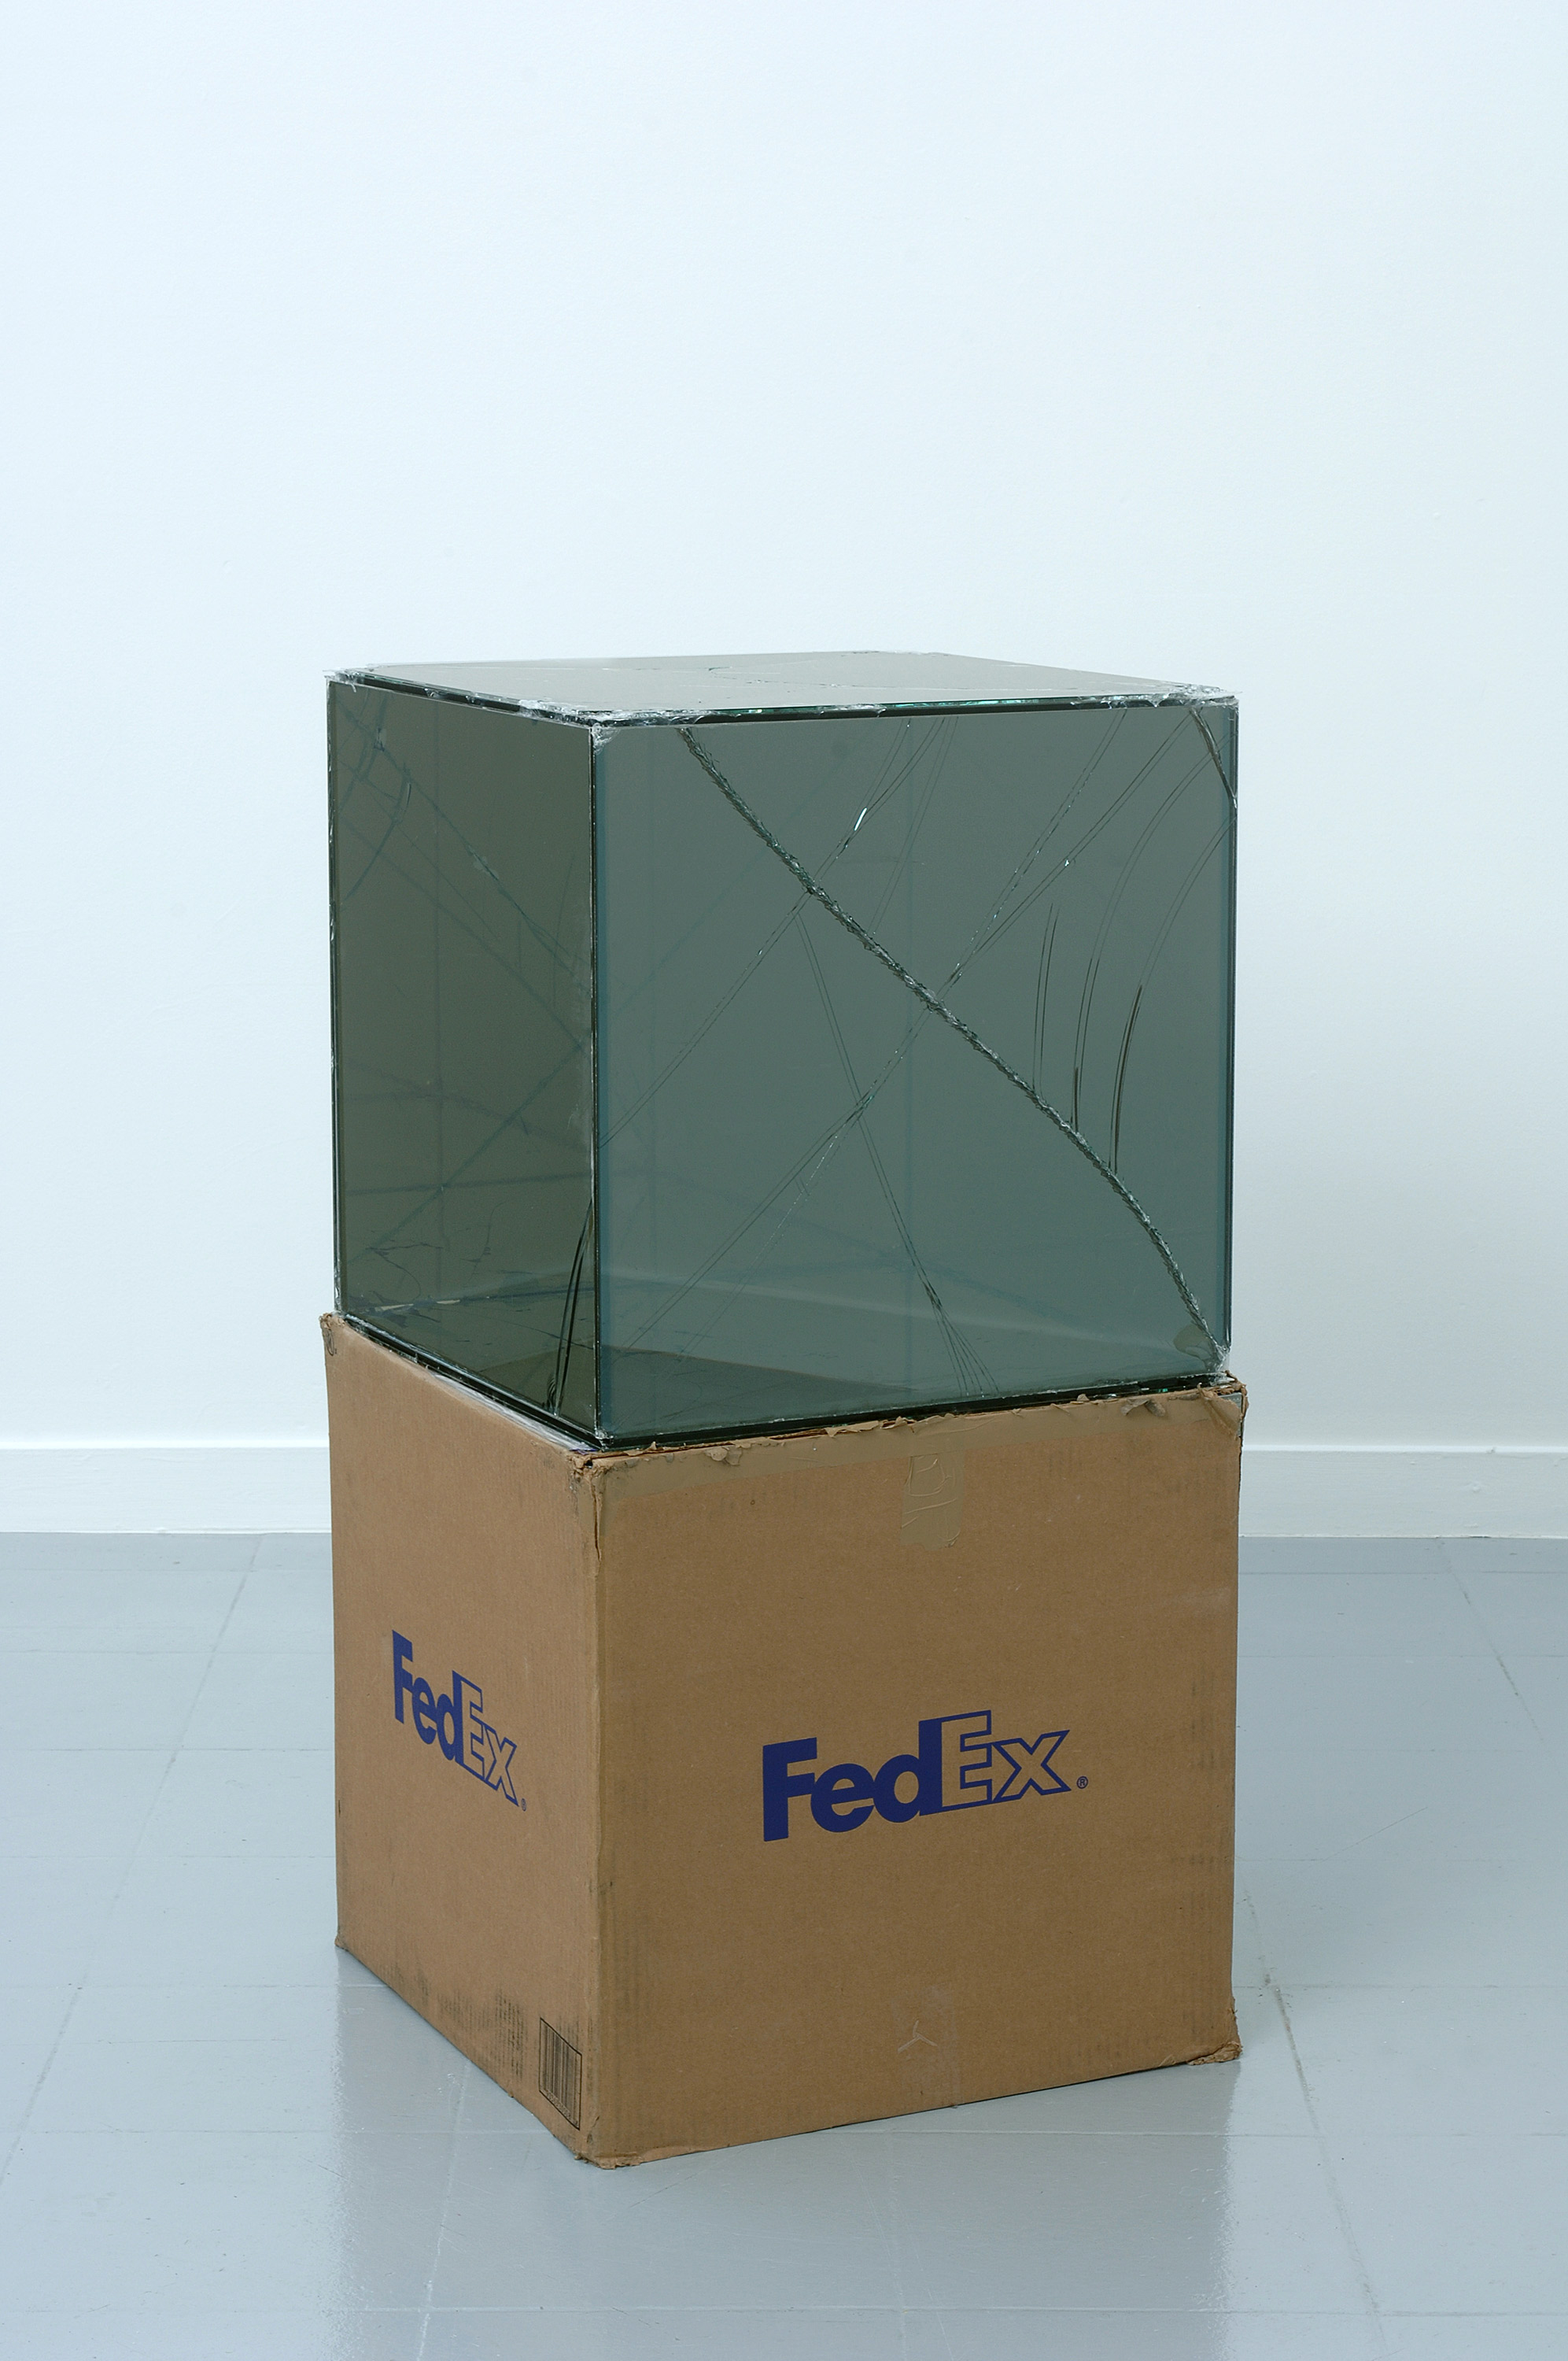   FedEx® Large Kraft Box 2005 FEDEX 330508 REV 10/05 SSCC, International Priority, Los Angeles–Brussels trk#865282057942, October 27–30, 2008    2008–   Laminated Mirropane, FedEx shipping box, accrued FedEx shipping and tracking labels, silicone, m